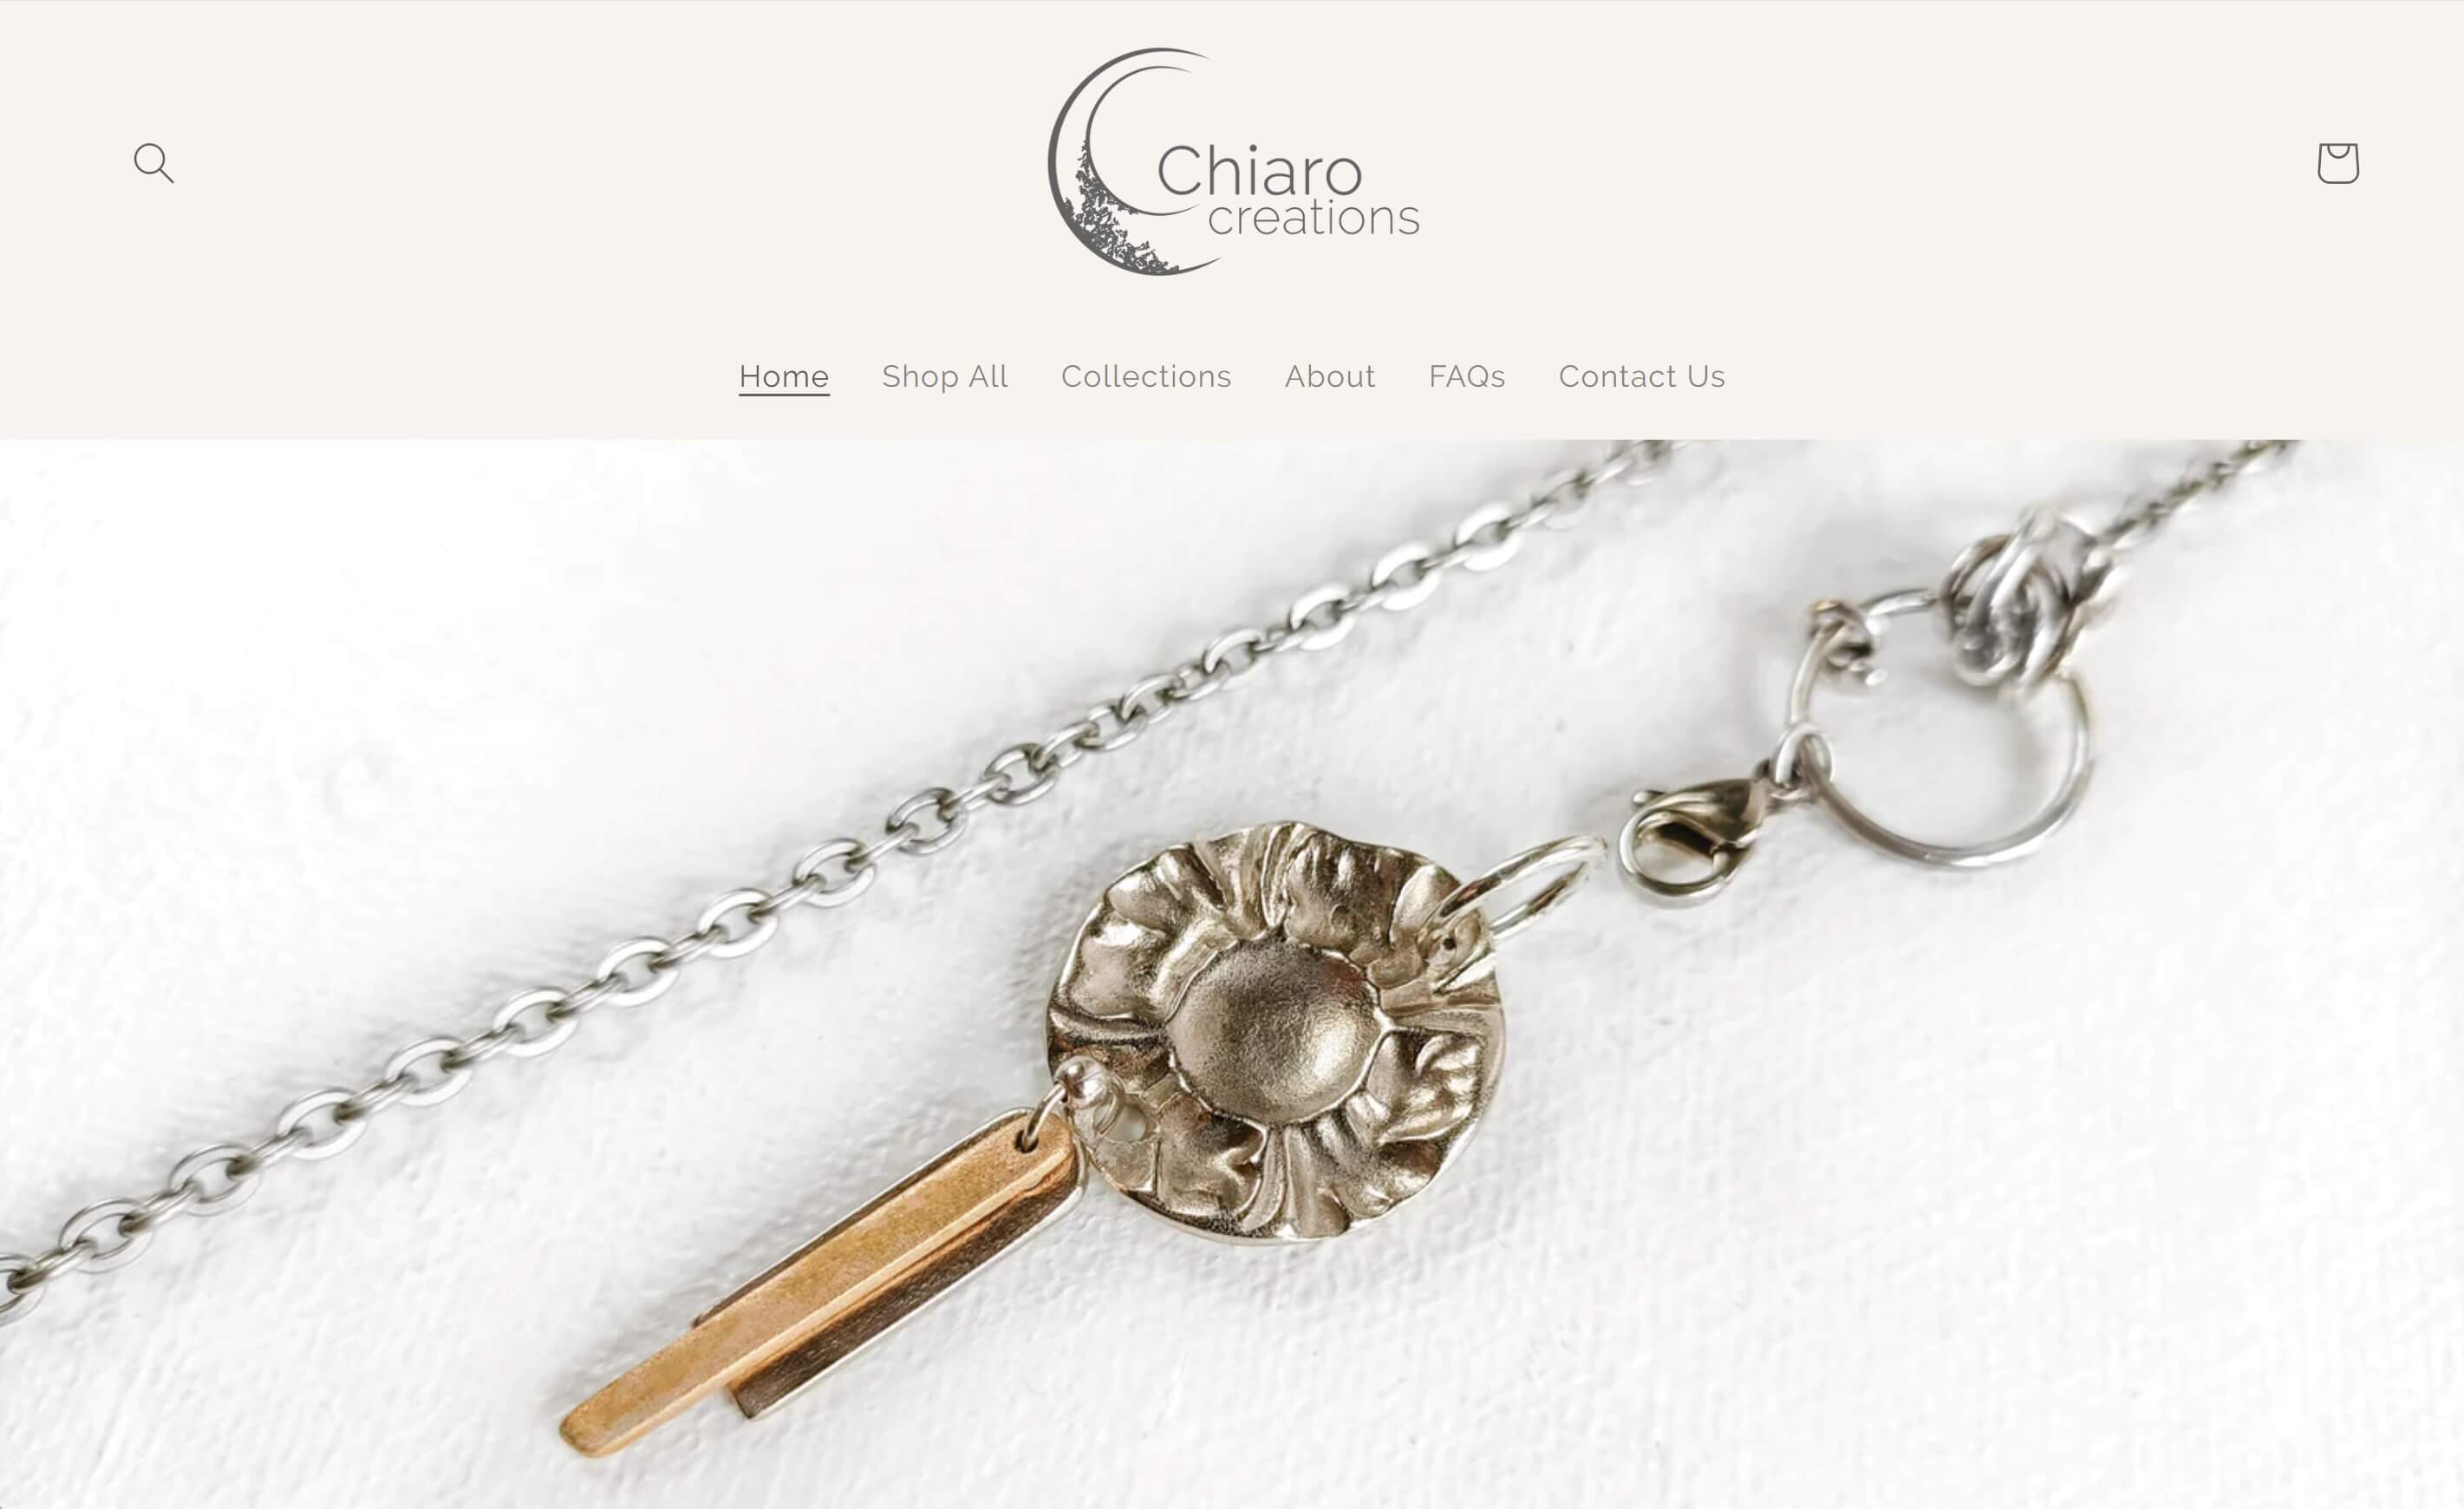 Chiaro Creations Jewelry shop website homepage.